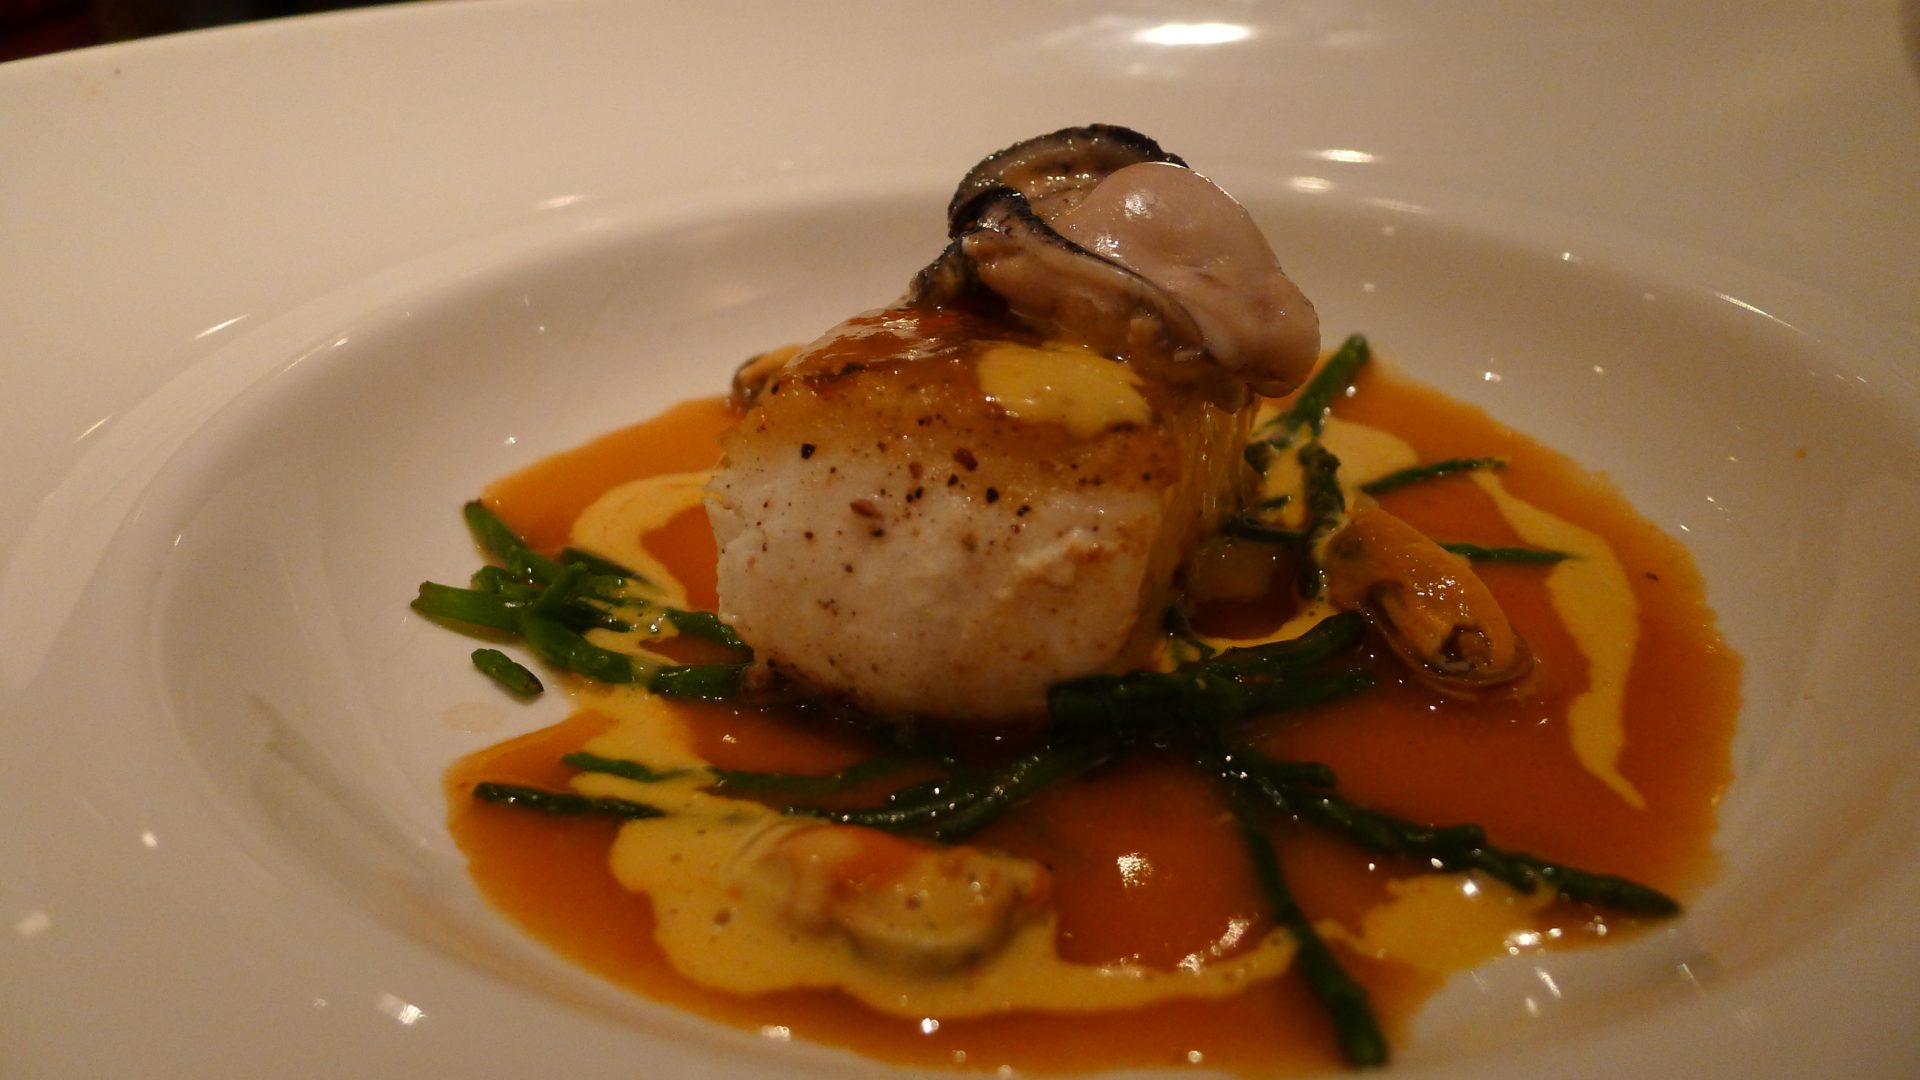 Terras Gauda and Pittacum Dinner at Cava Restaurant: A Photo Essay